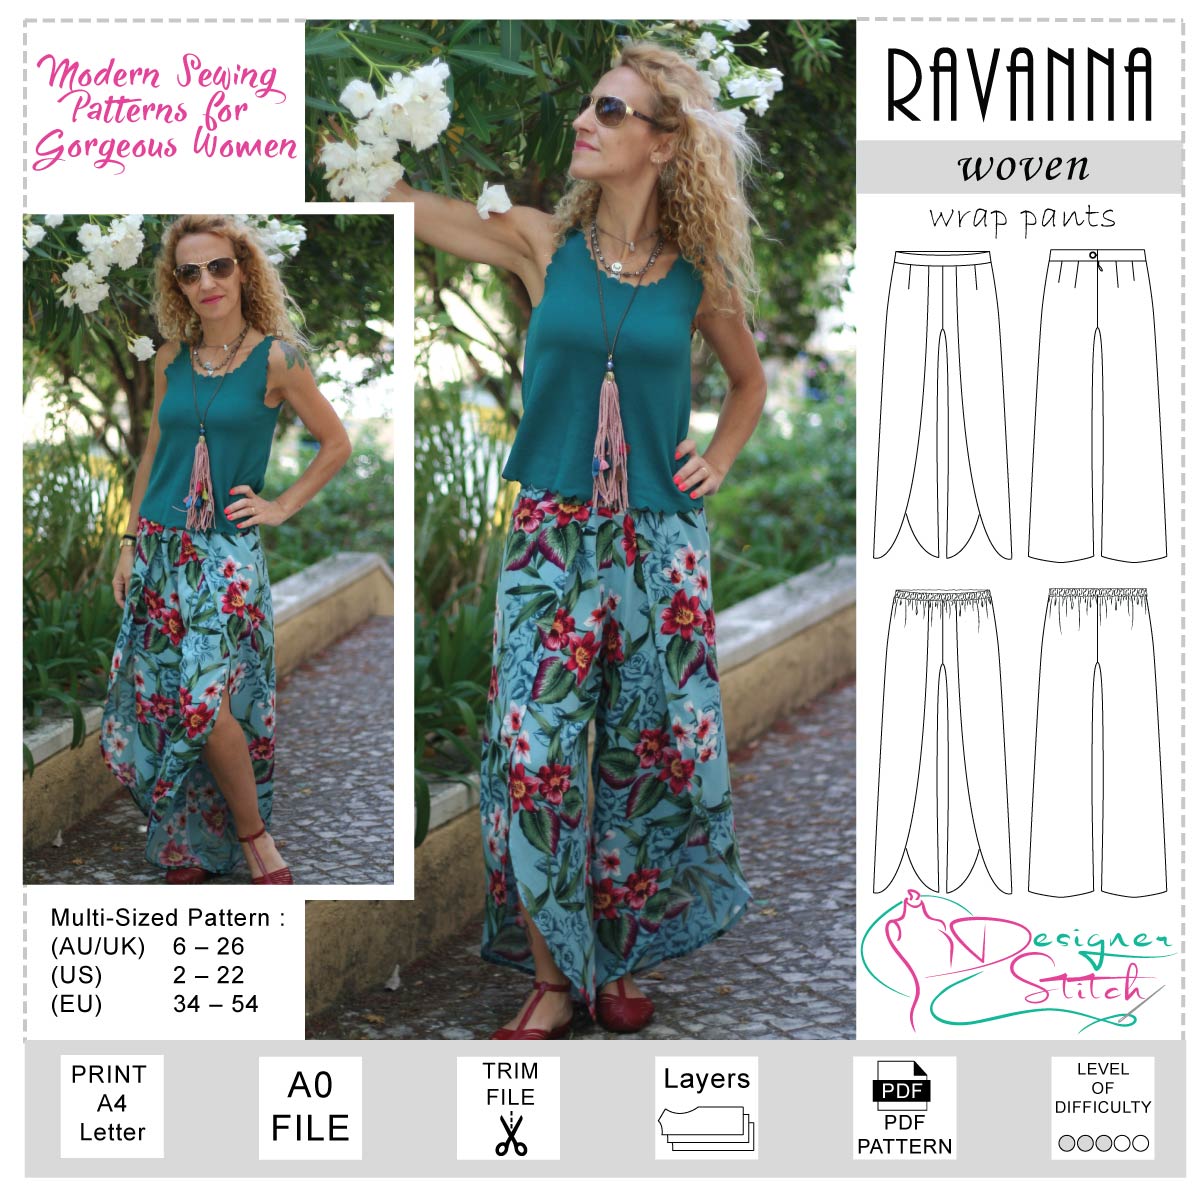 Ravanna Wrap Pants Sewing Pattern (PDF) - Designer Stitch